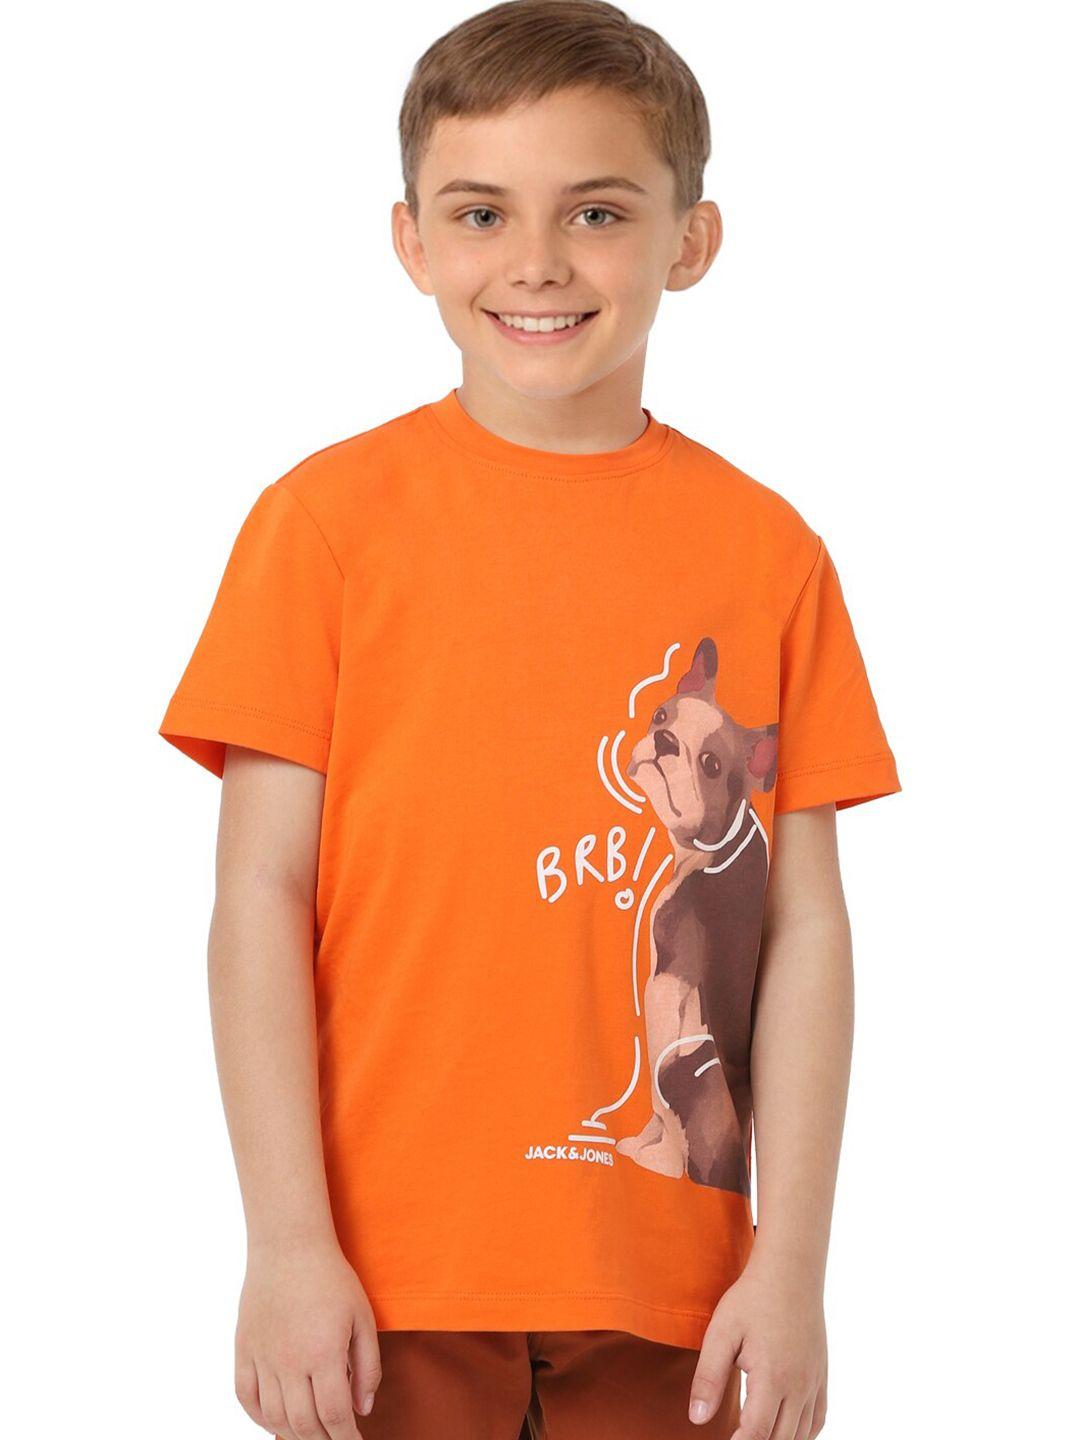 jack & jones boys orange printed t-shirt